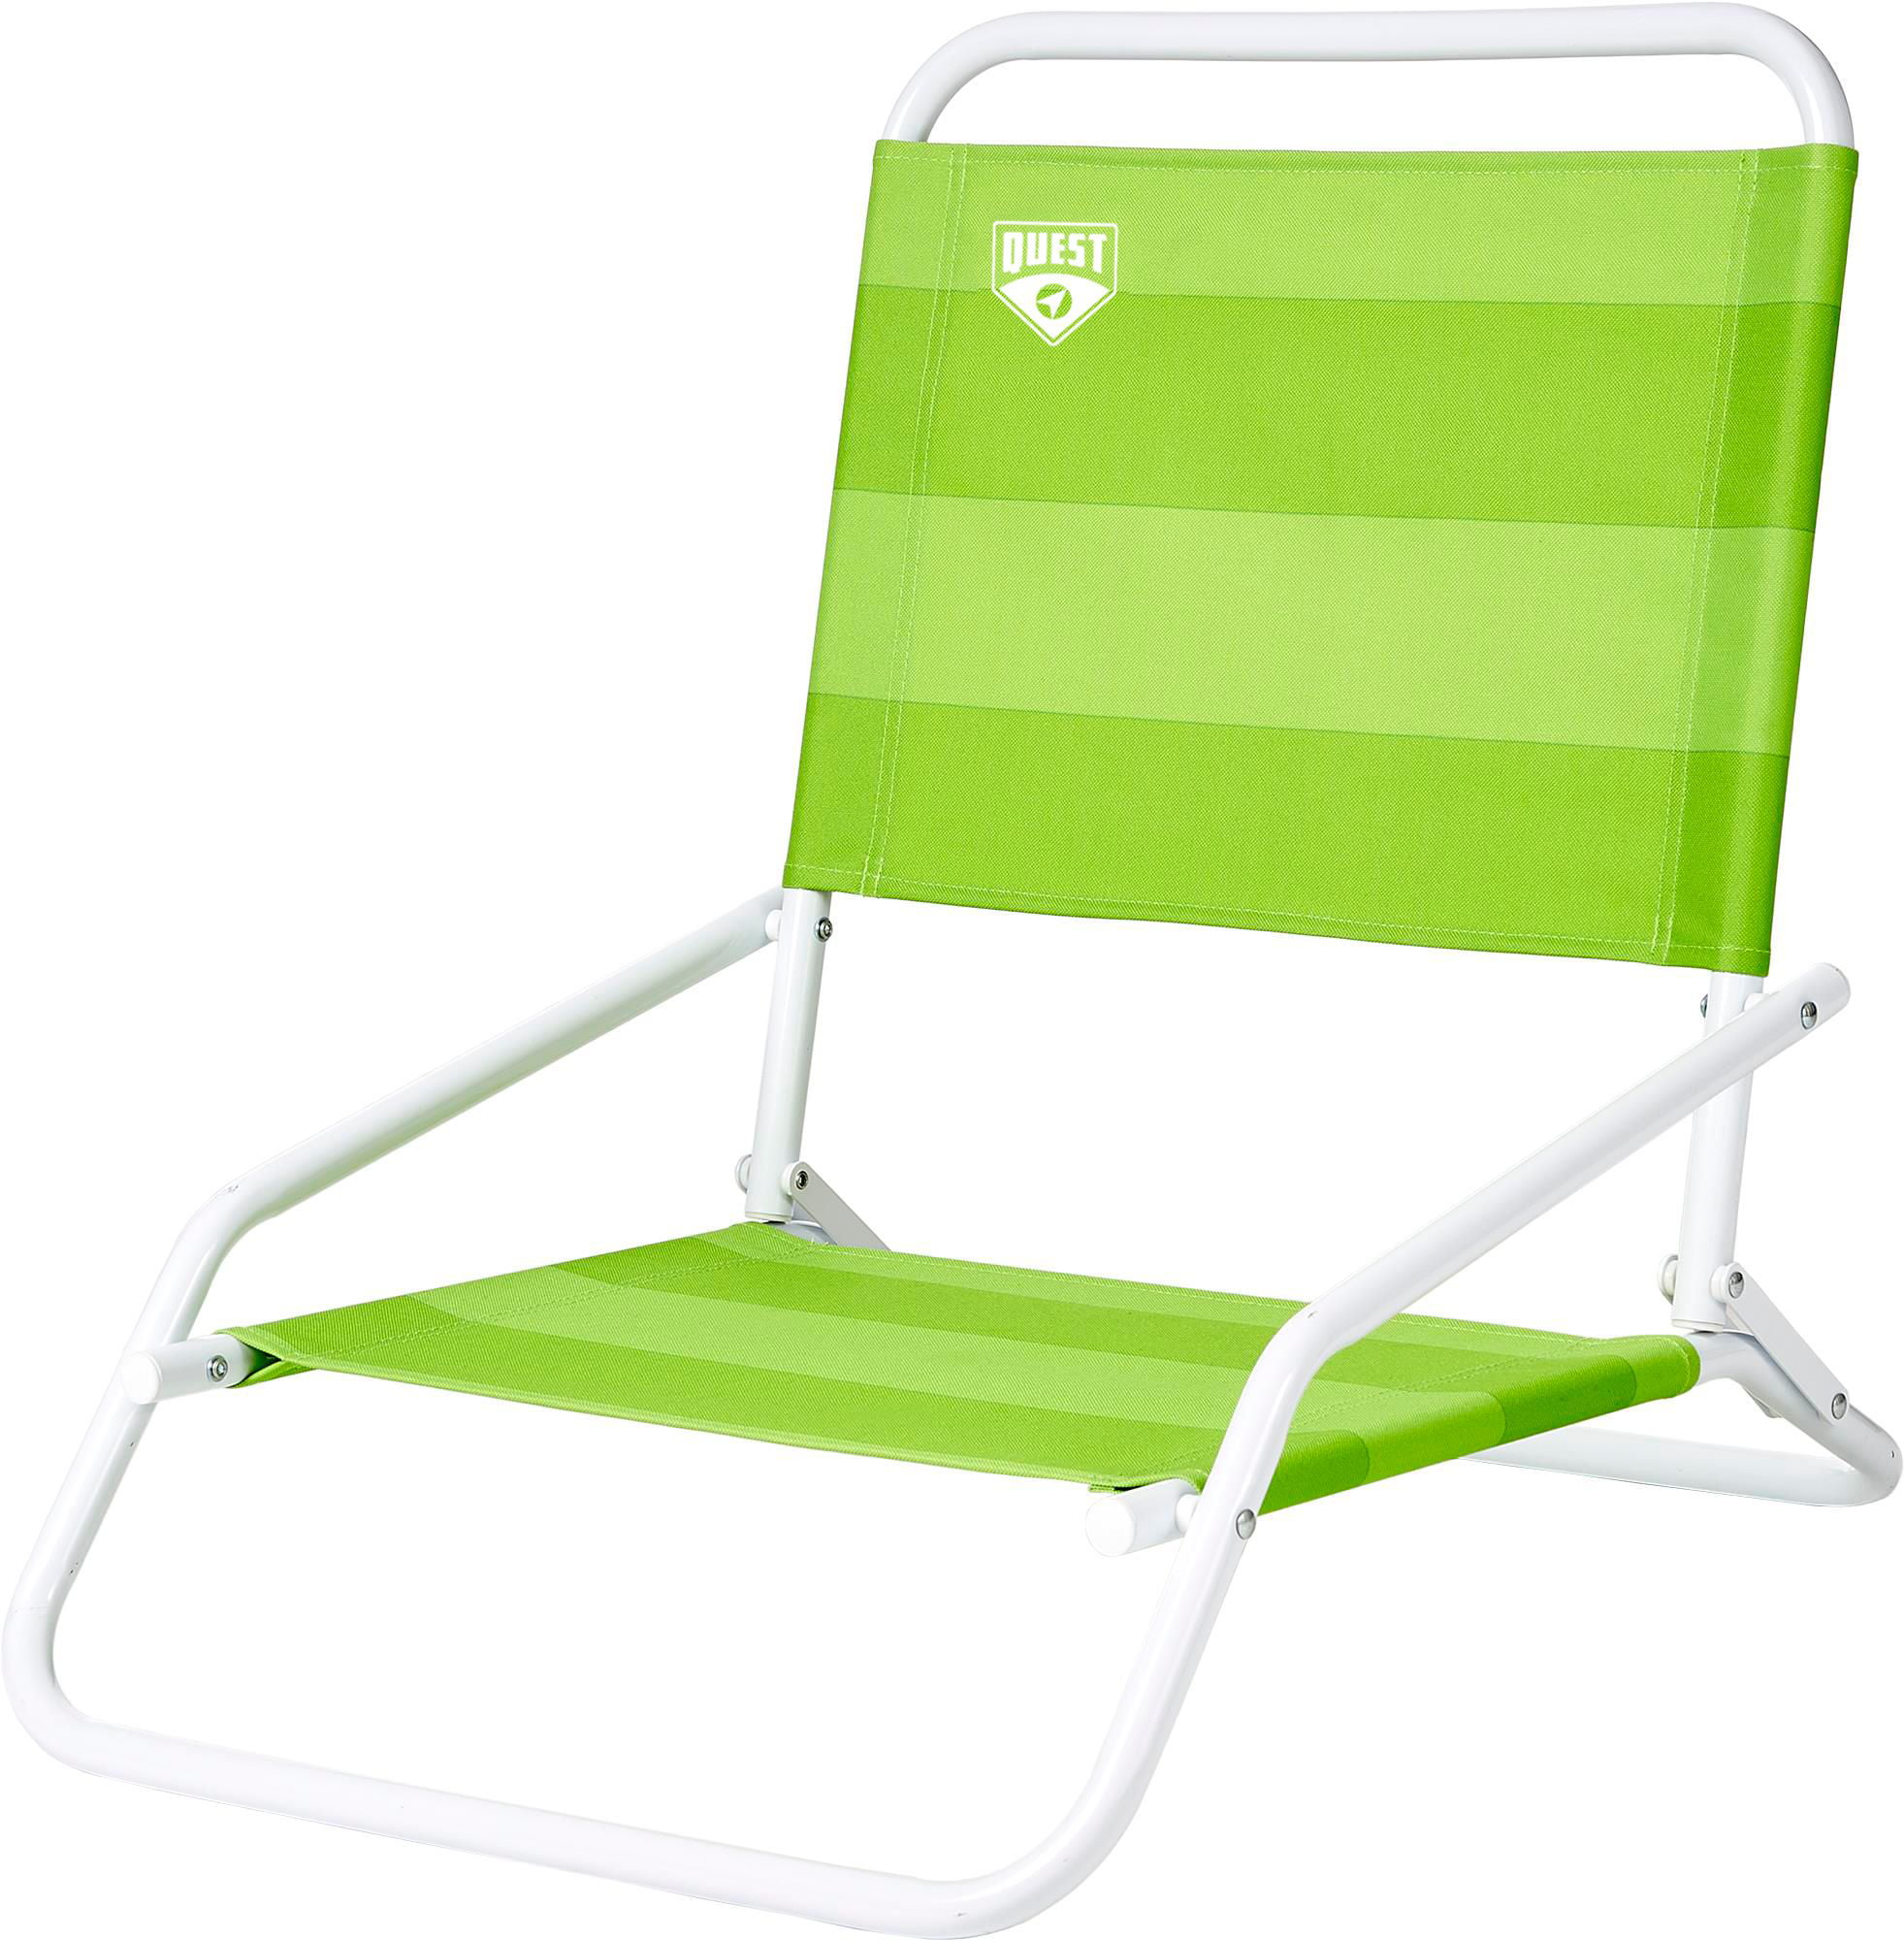 Quest Beach Chair - Walmart.com 